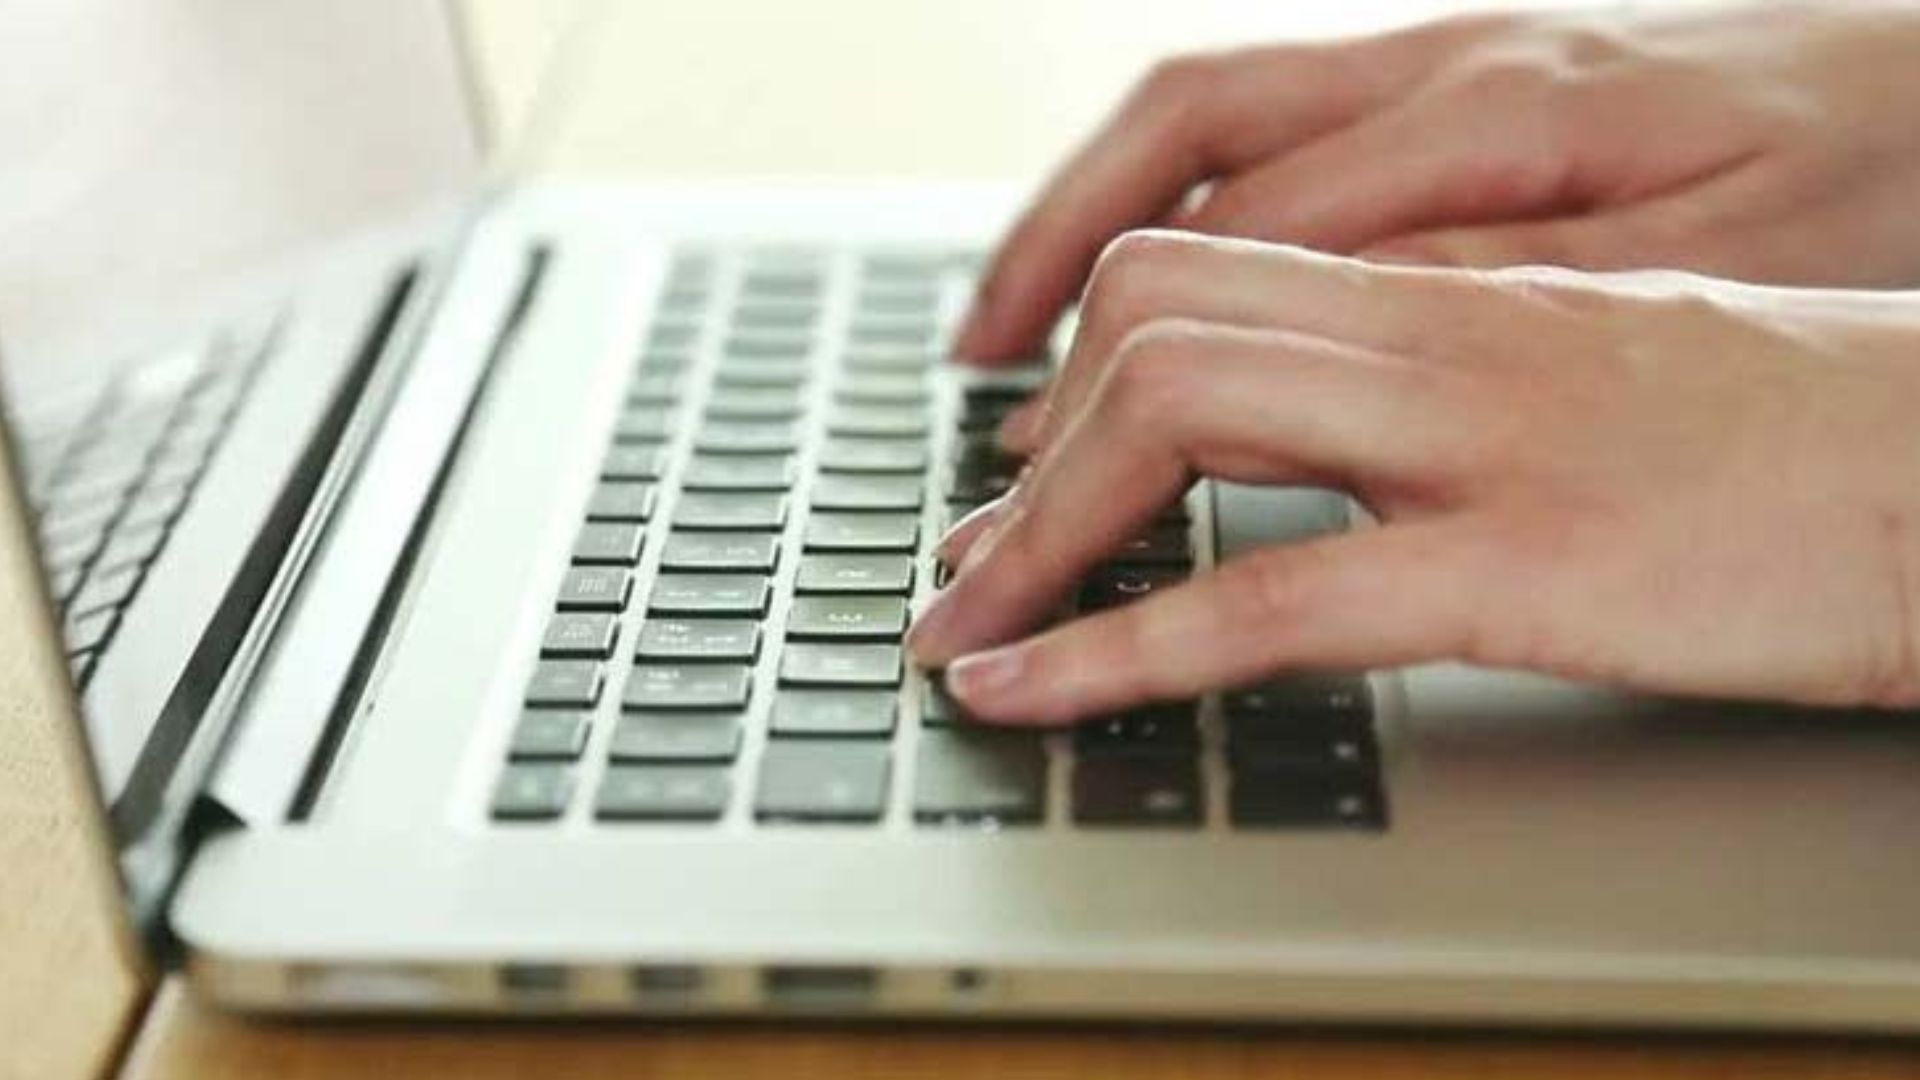 Cara menonaktifkan keyboard laptop windows 10 